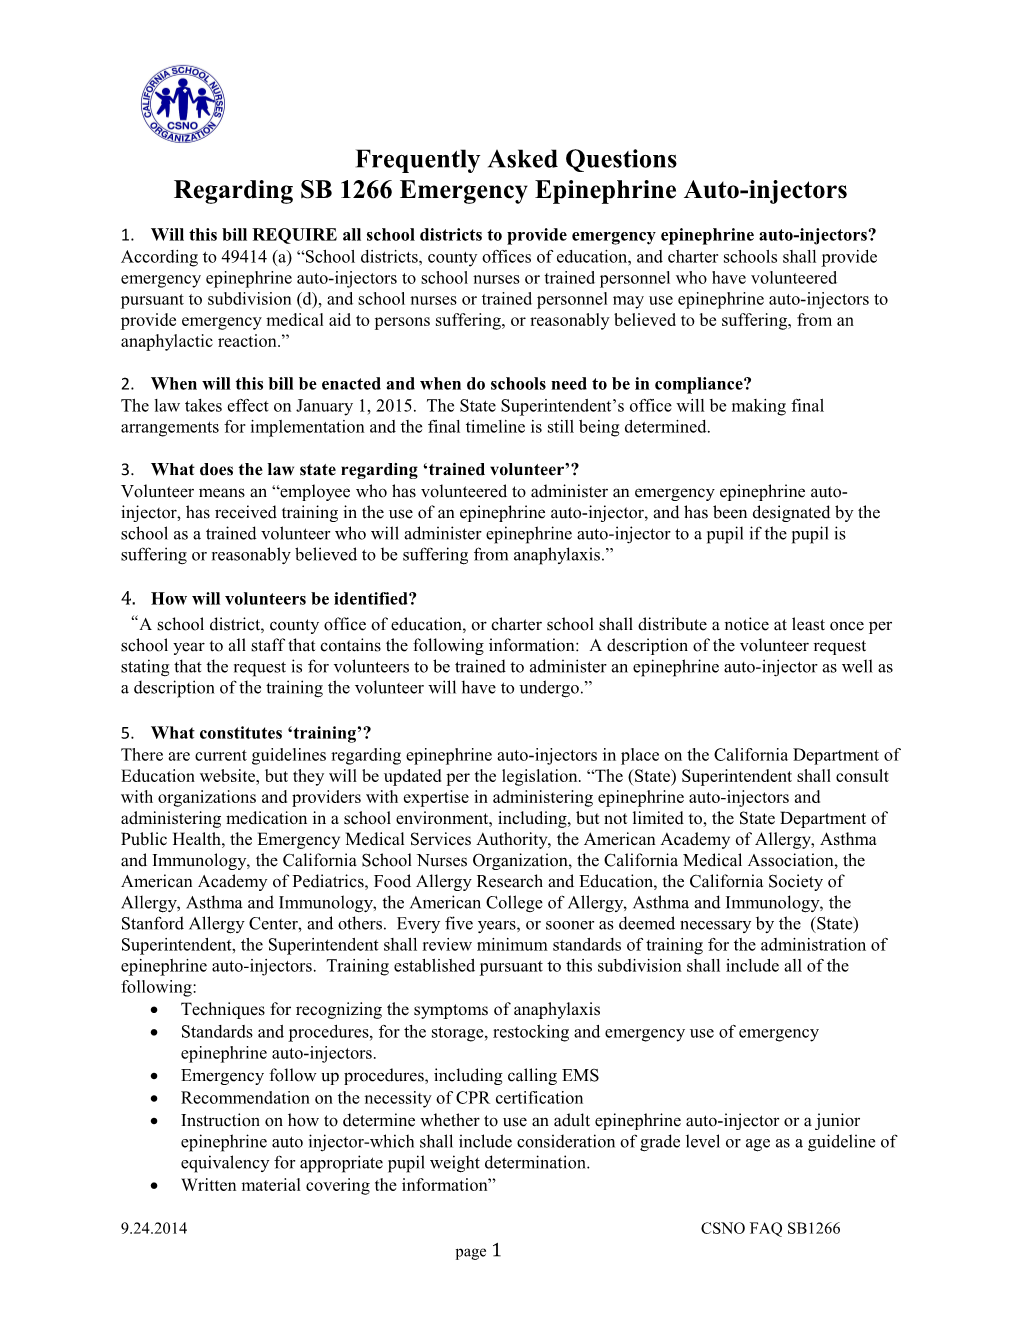 Regarding SB 1266 Emergency Epinephrine Auto-Injectors